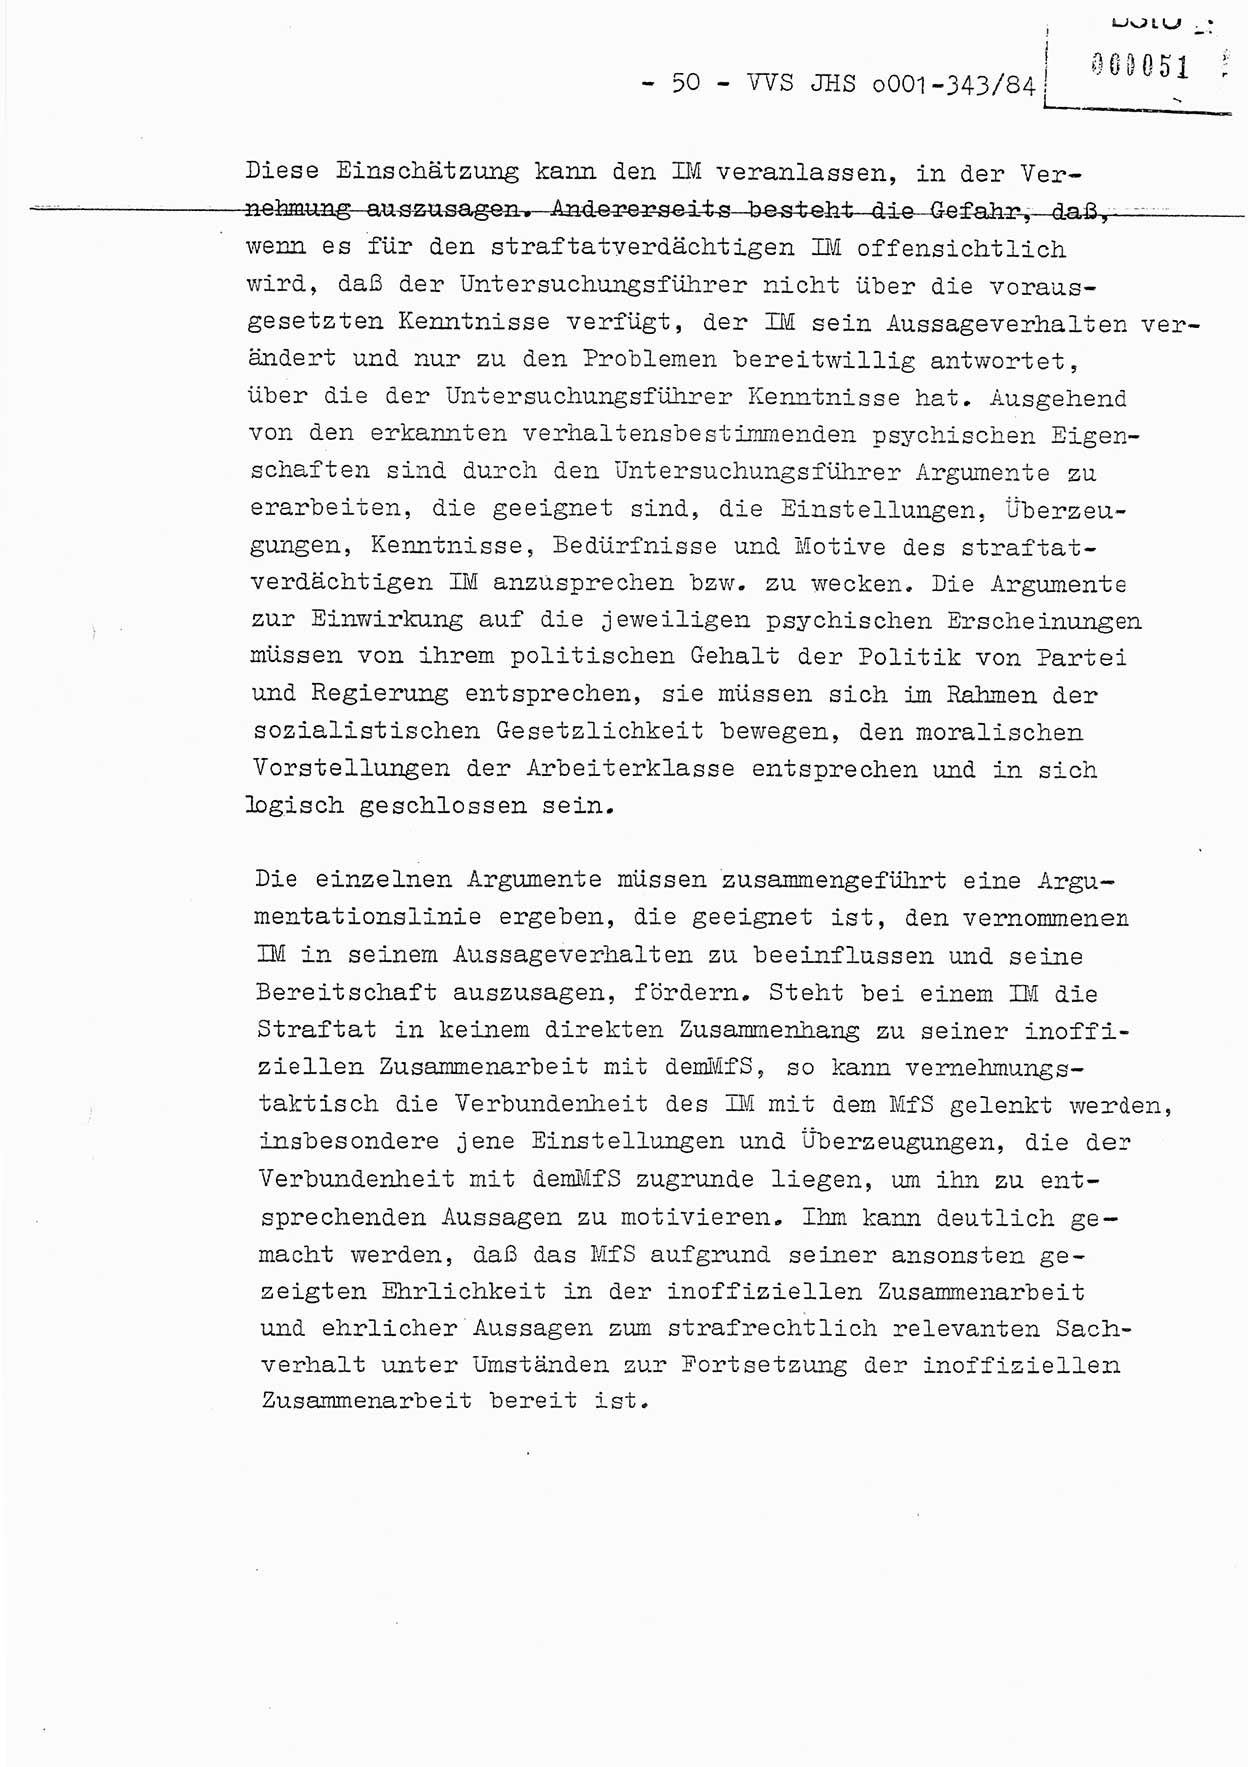 Diplomarbeit, Oberleutnant Bernd Michael (HA Ⅸ/5), Oberleutnant Peter Felber (HA IX/5), Ministerium für Staatssicherheit (MfS) [Deutsche Demokratische Republik (DDR)], Juristische Hochschule (JHS), Vertrauliche Verschlußsache (VVS) o001-343/84, Potsdam 1985, Seite 50 (Dipl.-Arb. MfS DDR JHS VVS o001-343/84 1985, S. 50)